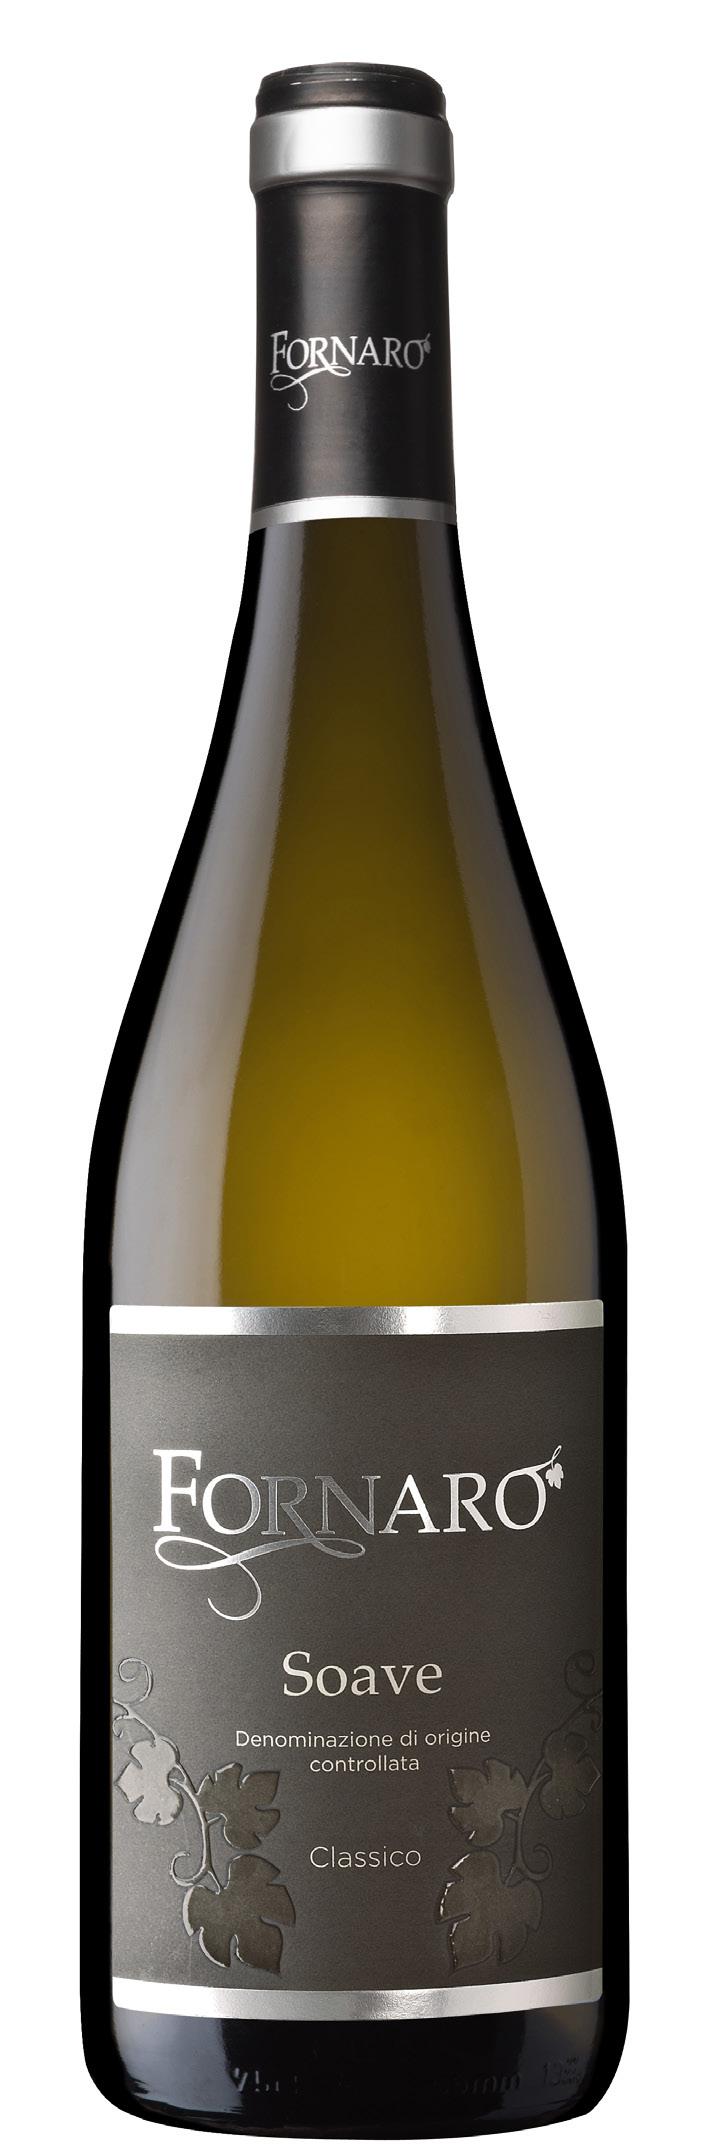 SOAVE CLASSICO DOC White Wine Appellation: Soave DOC Classico. Grape varieties: 100% Garganega. Soil: limestone.